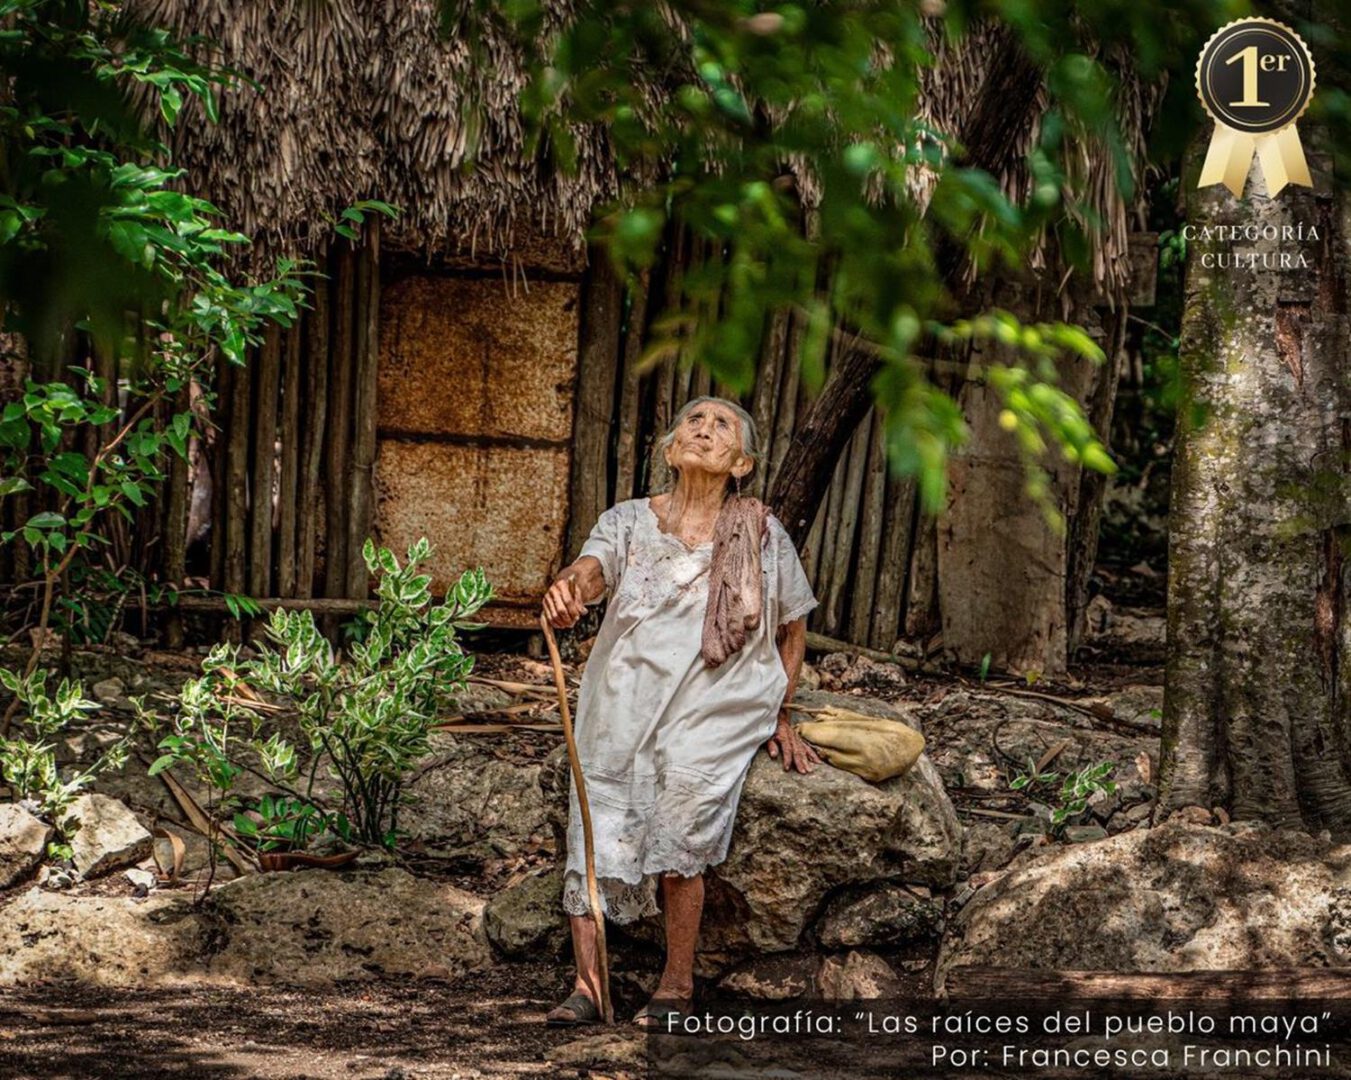 Concurso fotográfico Terra Península | Hola Tulum